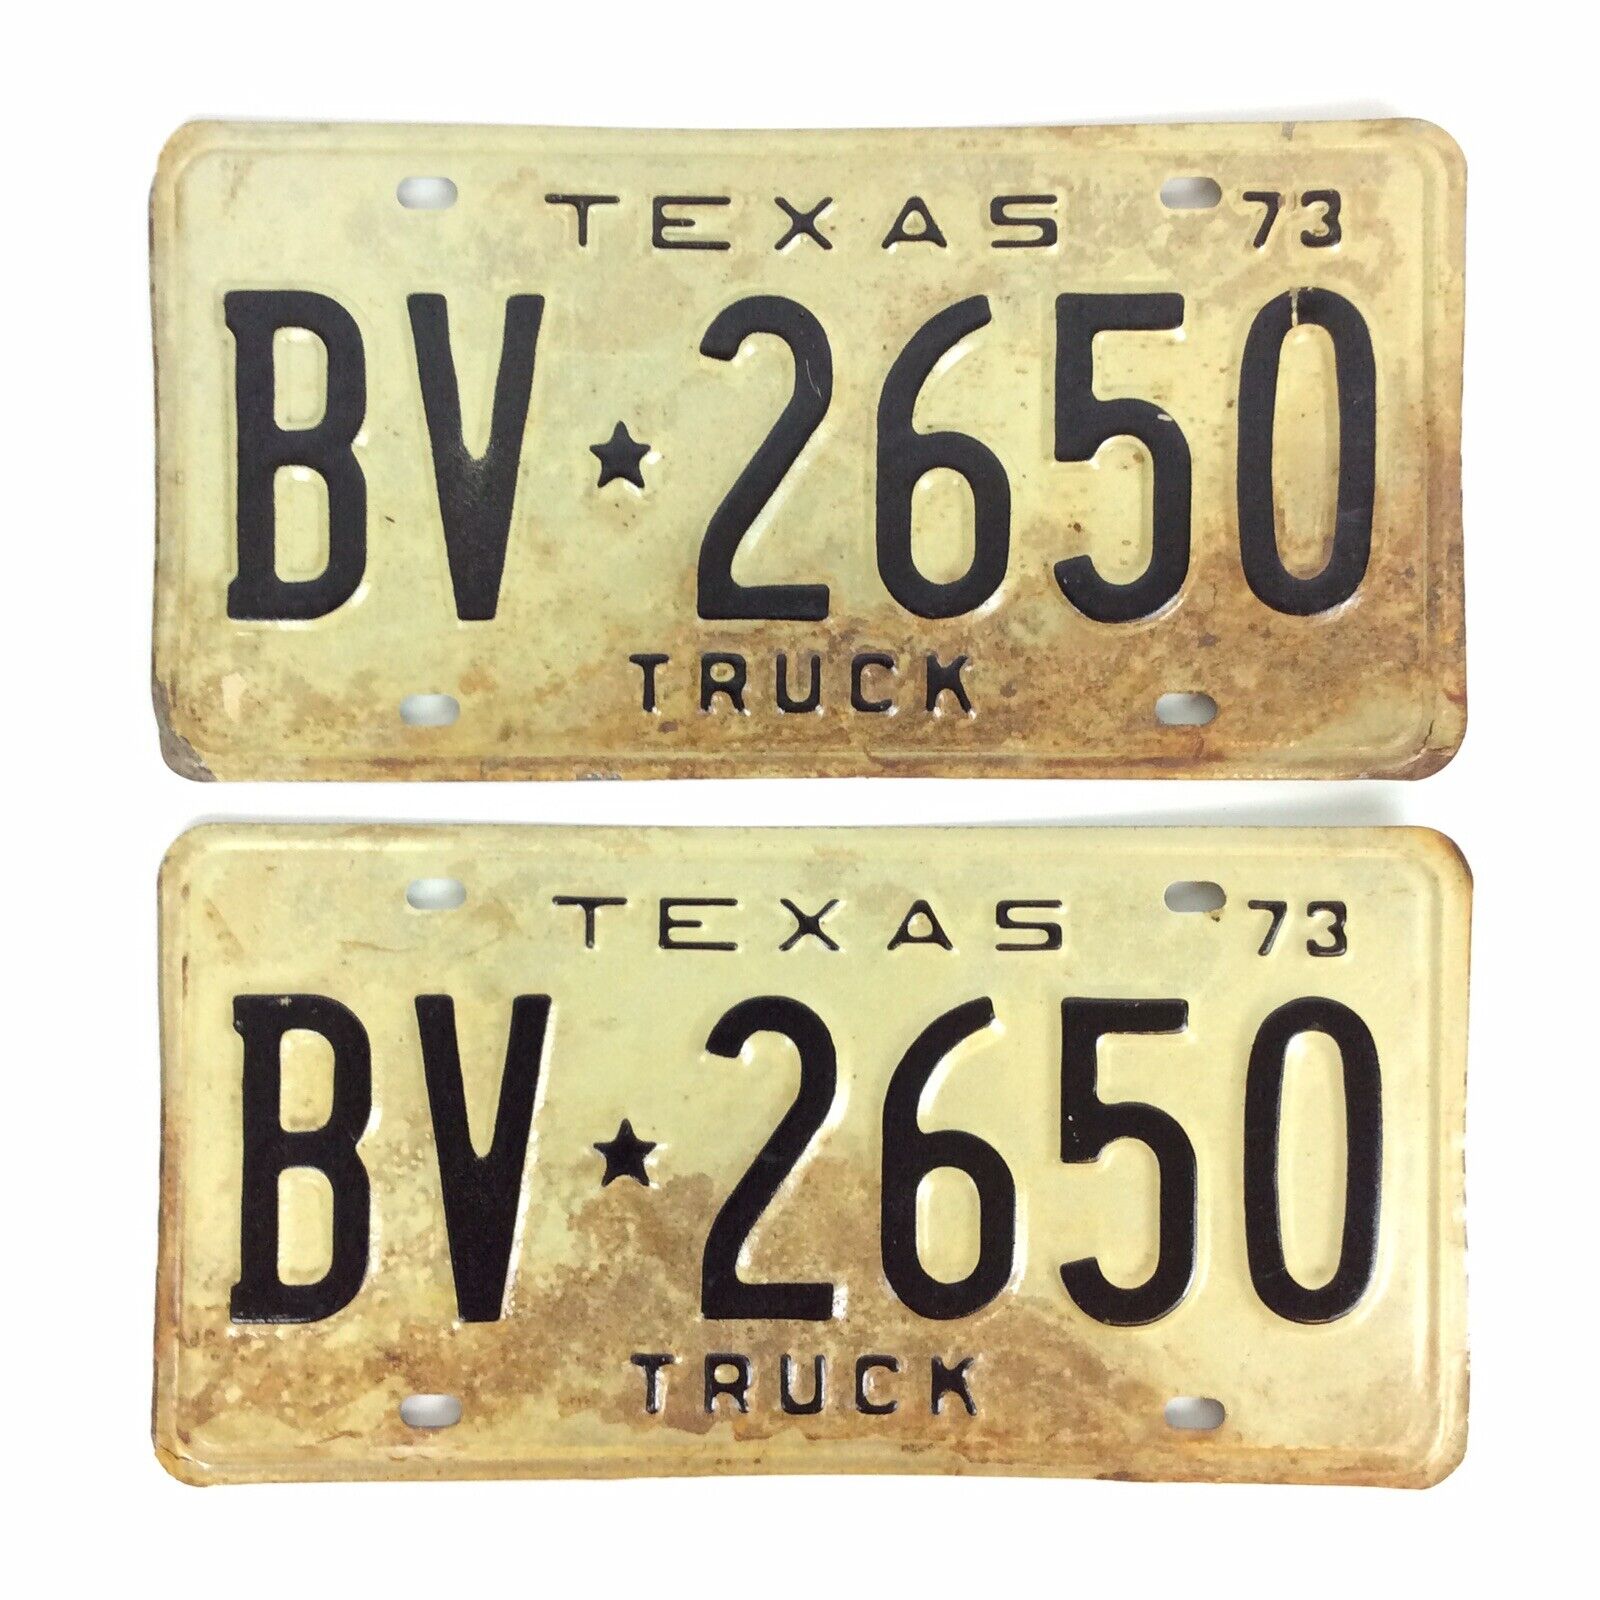 Vintage Texas Truck 1973 License Plate Pair BV 2650 Rusty Patina Man Cave Garage